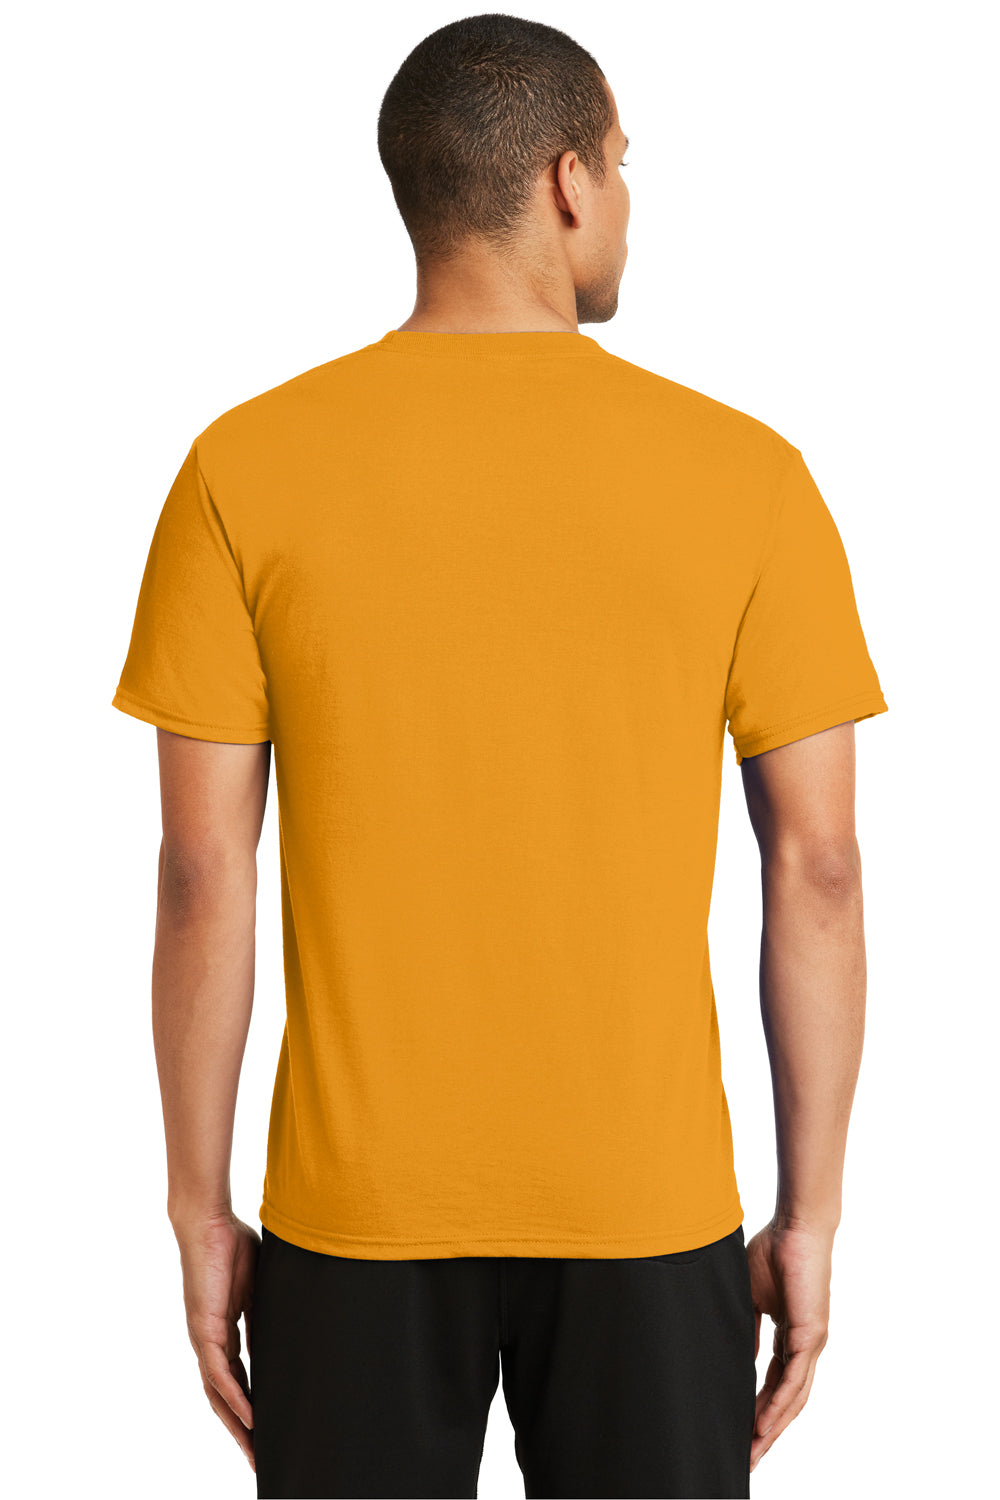 Port & Company PC381 Mens Dry Zone Performance Moisture Wicking Short Sleeve Crewneck T-Shirt Gold Back